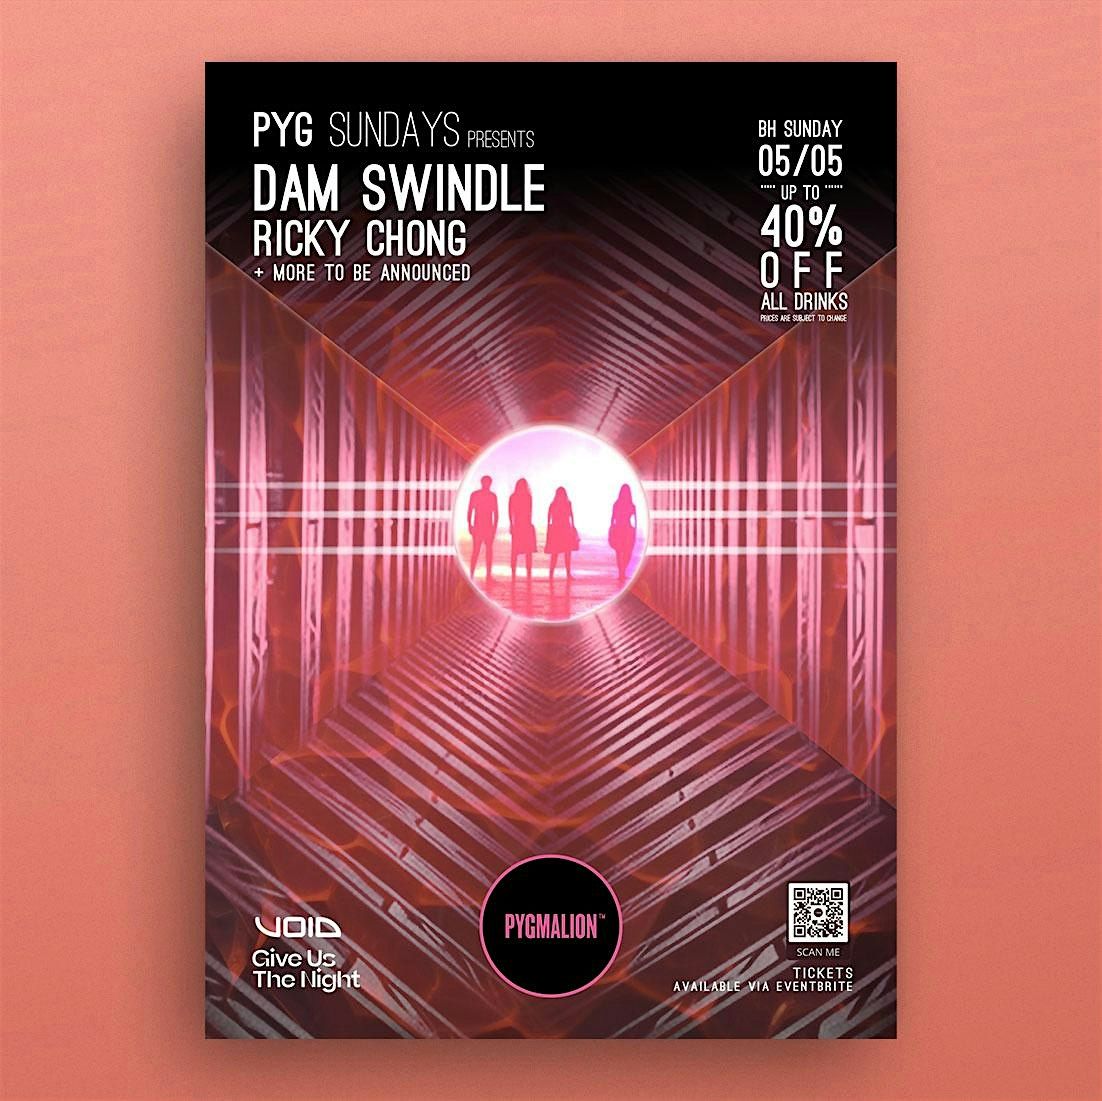 Pyg Sundays present Dam Swindle